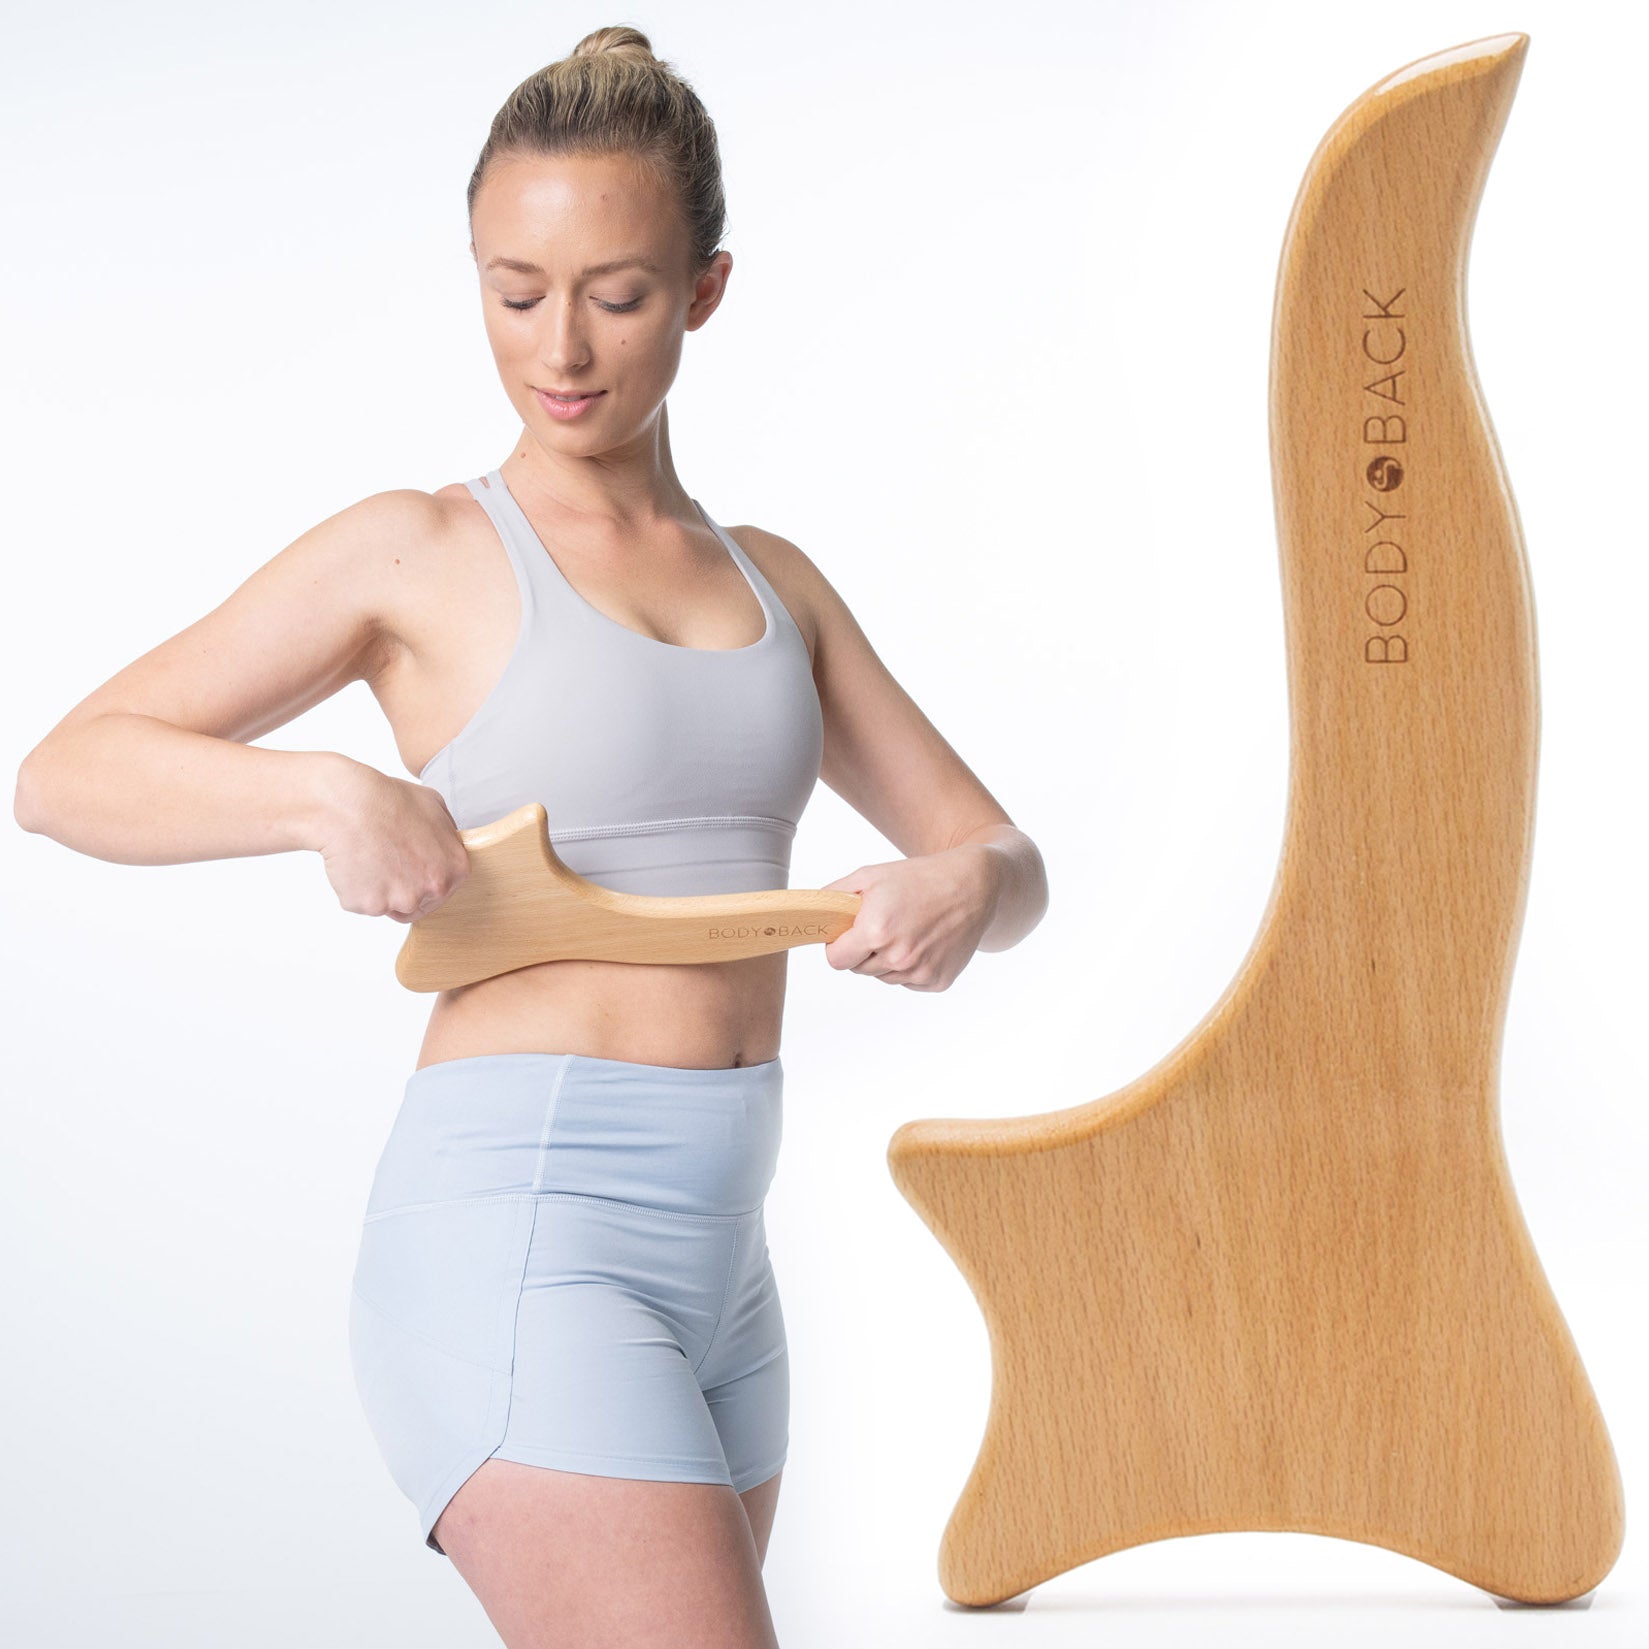 Wood Trigger Point Massage Gua Sha Tools Professional Lymphatic